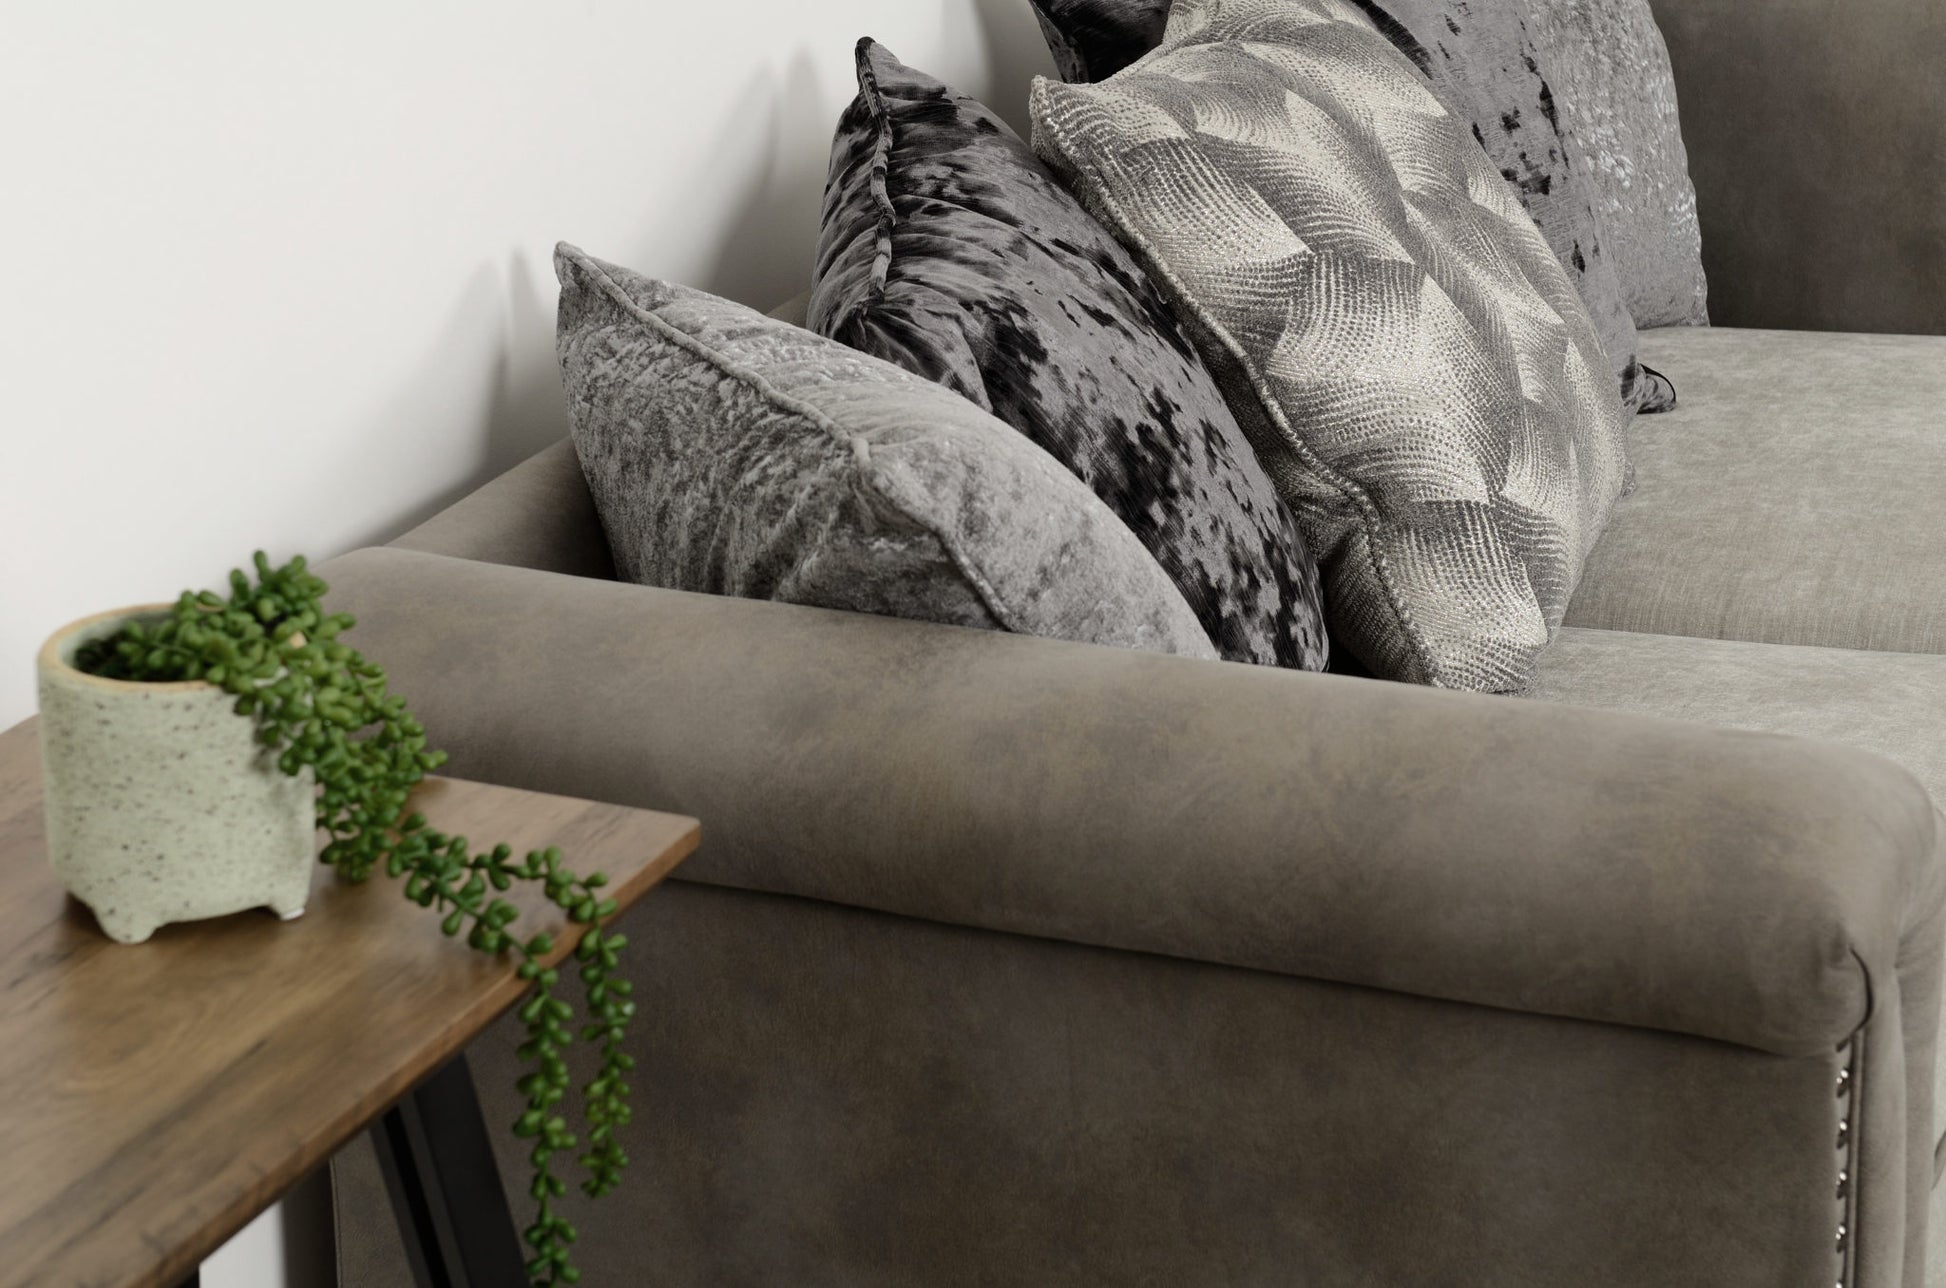 Grace 3 Seater Sofa - Silver/Grey Fabric